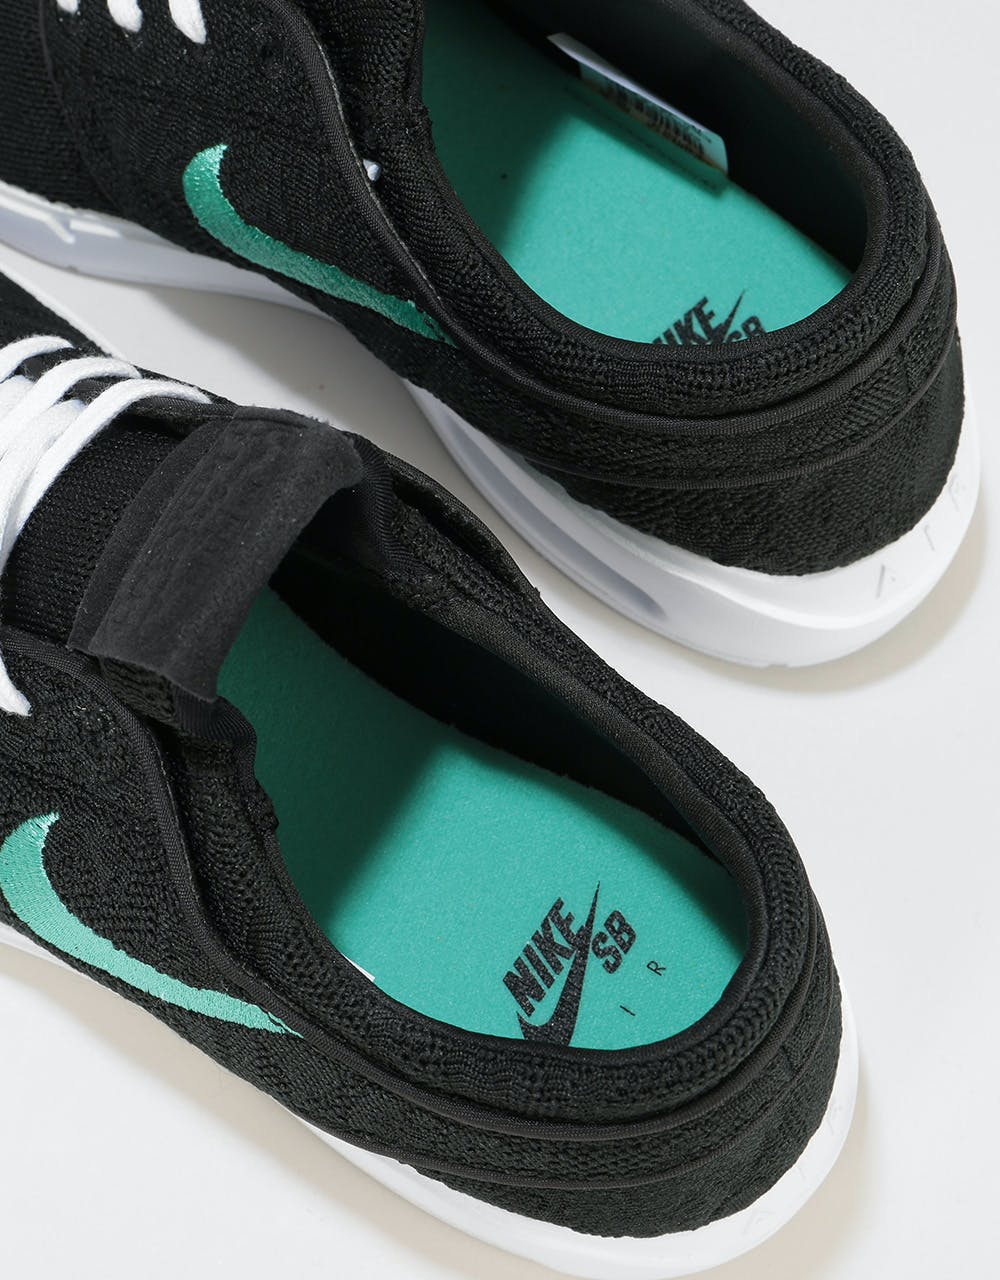 Nike SB Air Max Janoski 2 Skate Shoes - Black/Mint-Black